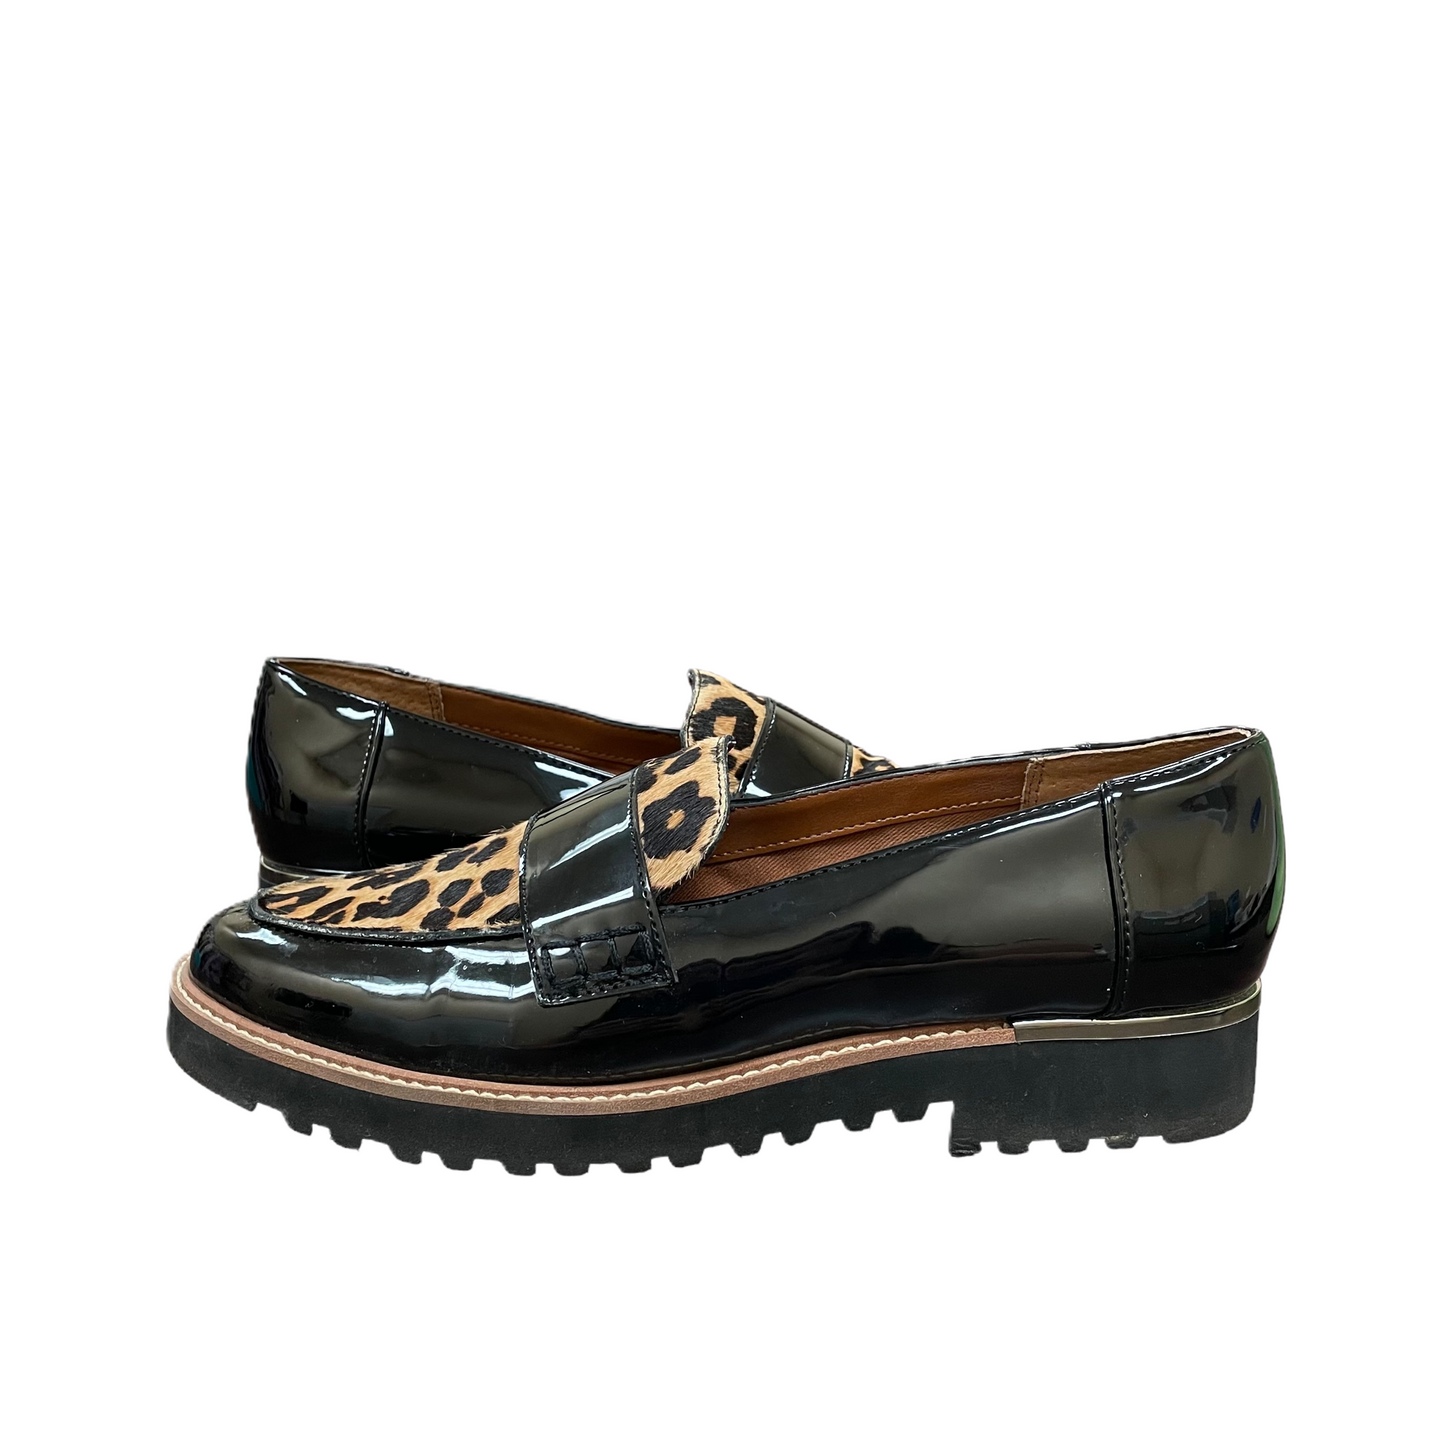 Black Shoes Flats By Franco Sarto, Size: 8